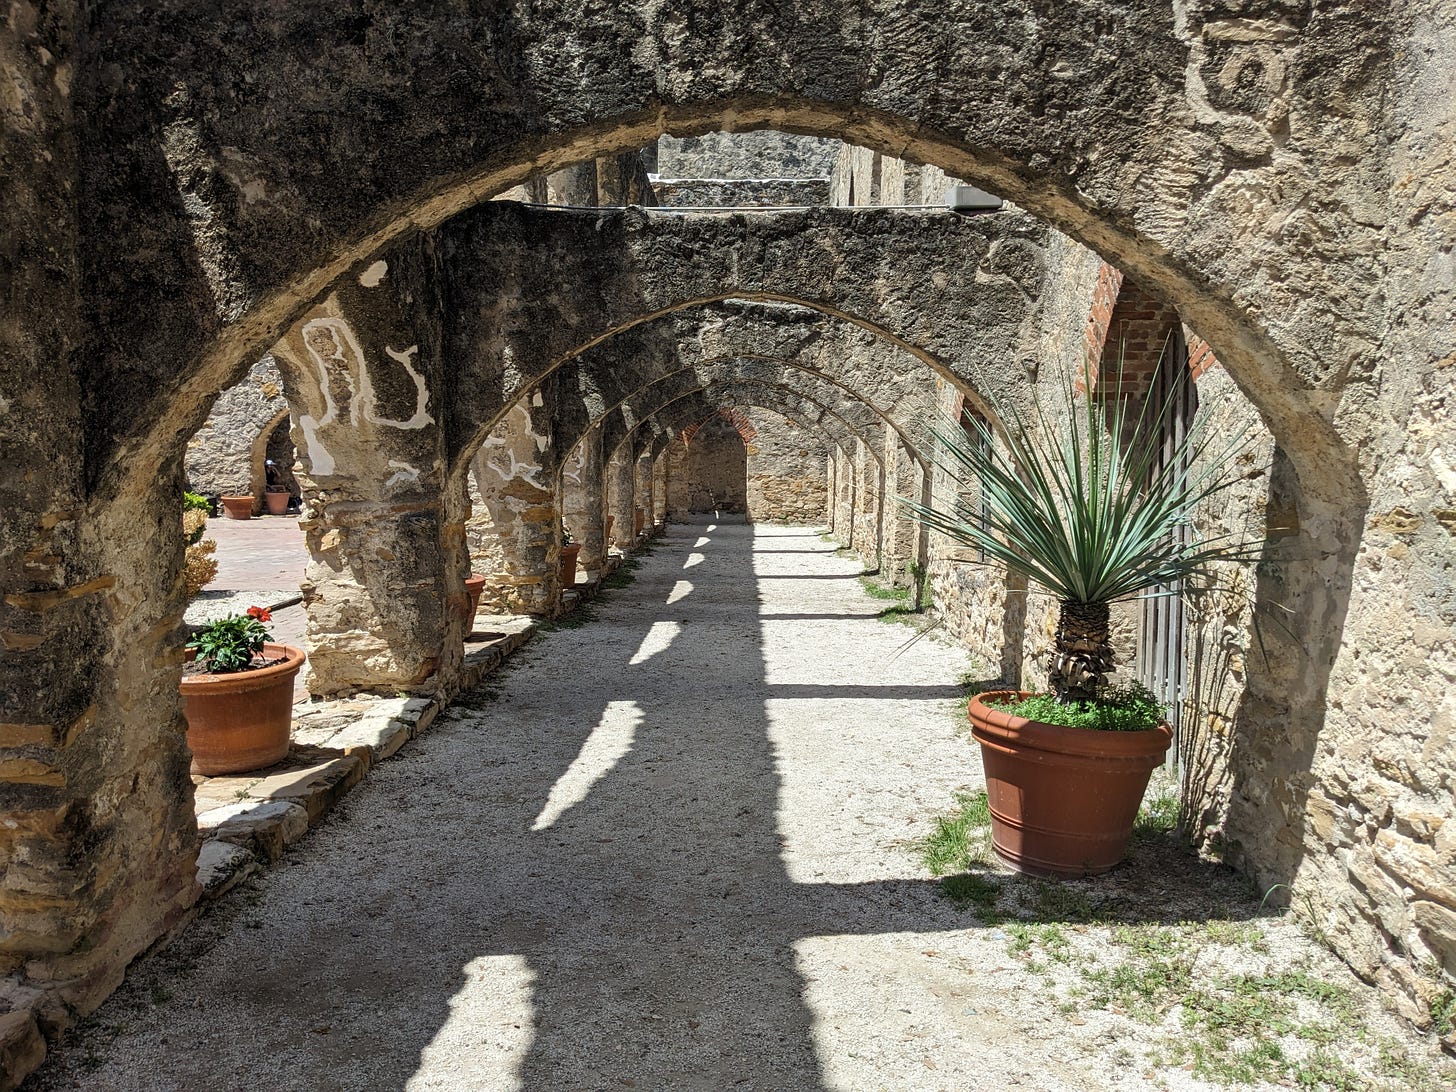 Image: A corridor on the Mission San José courtyard, San Antonio, Texas (Photo credit: the writer)